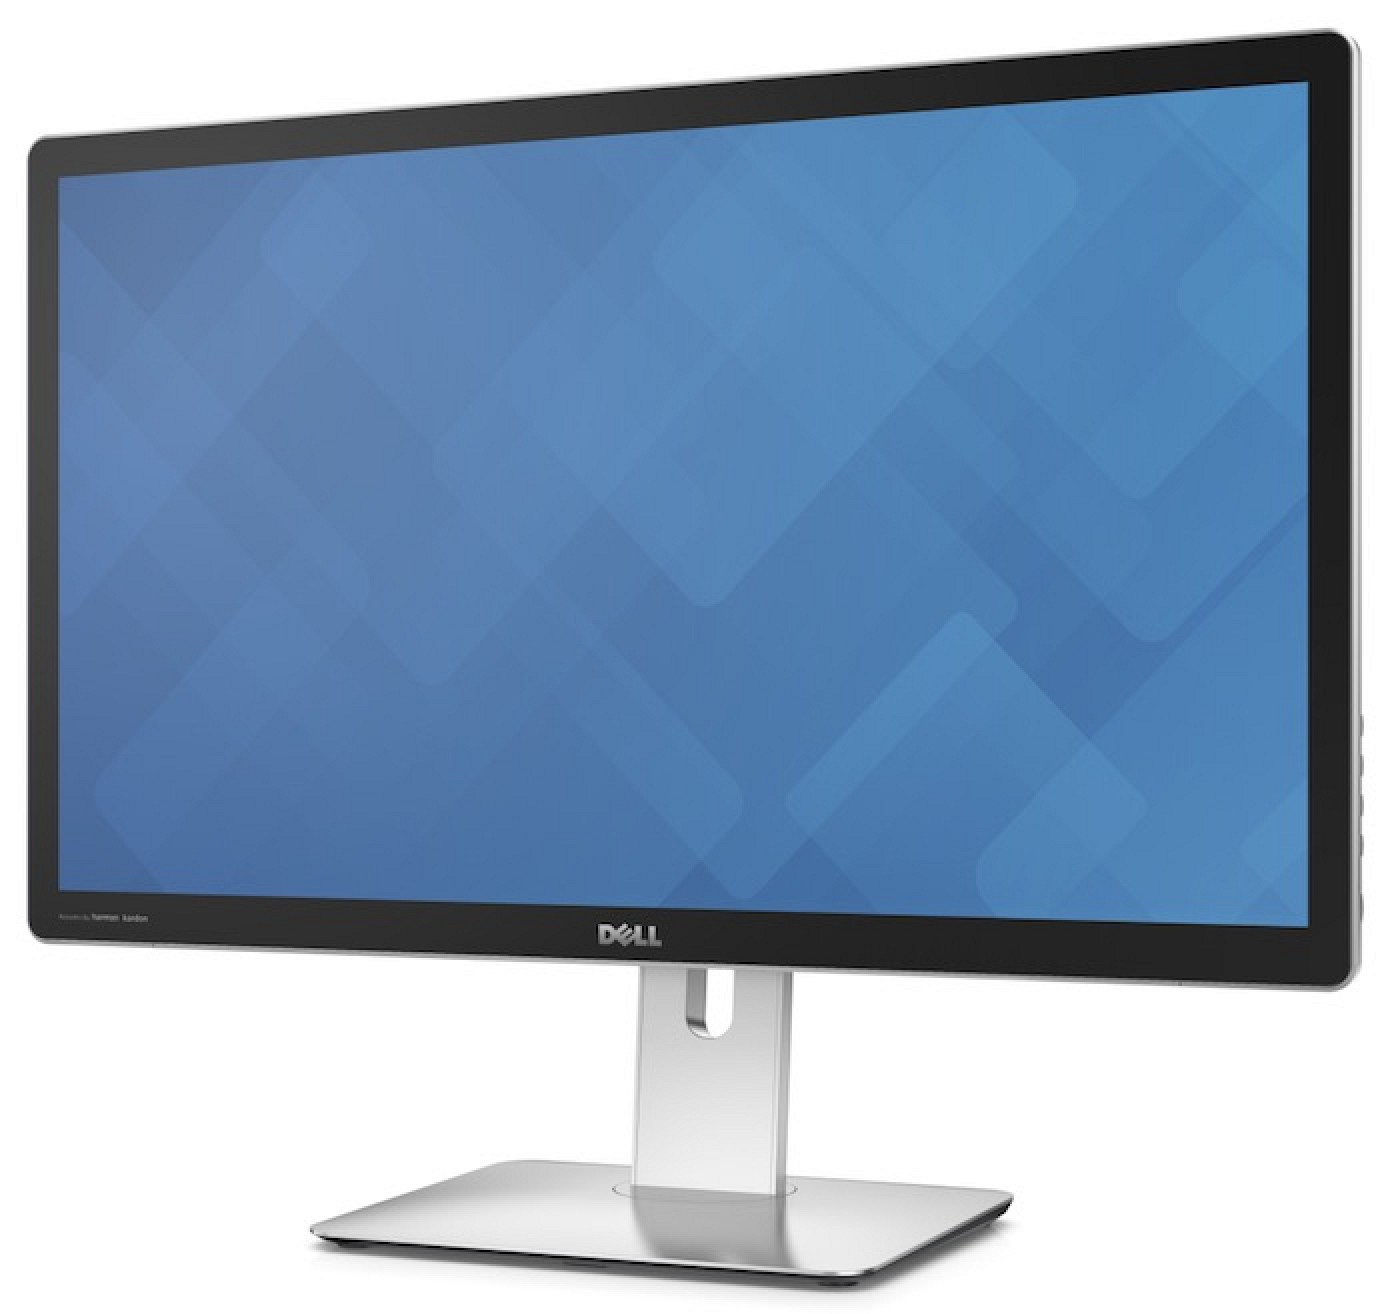 Mac Software For Dell Monitors